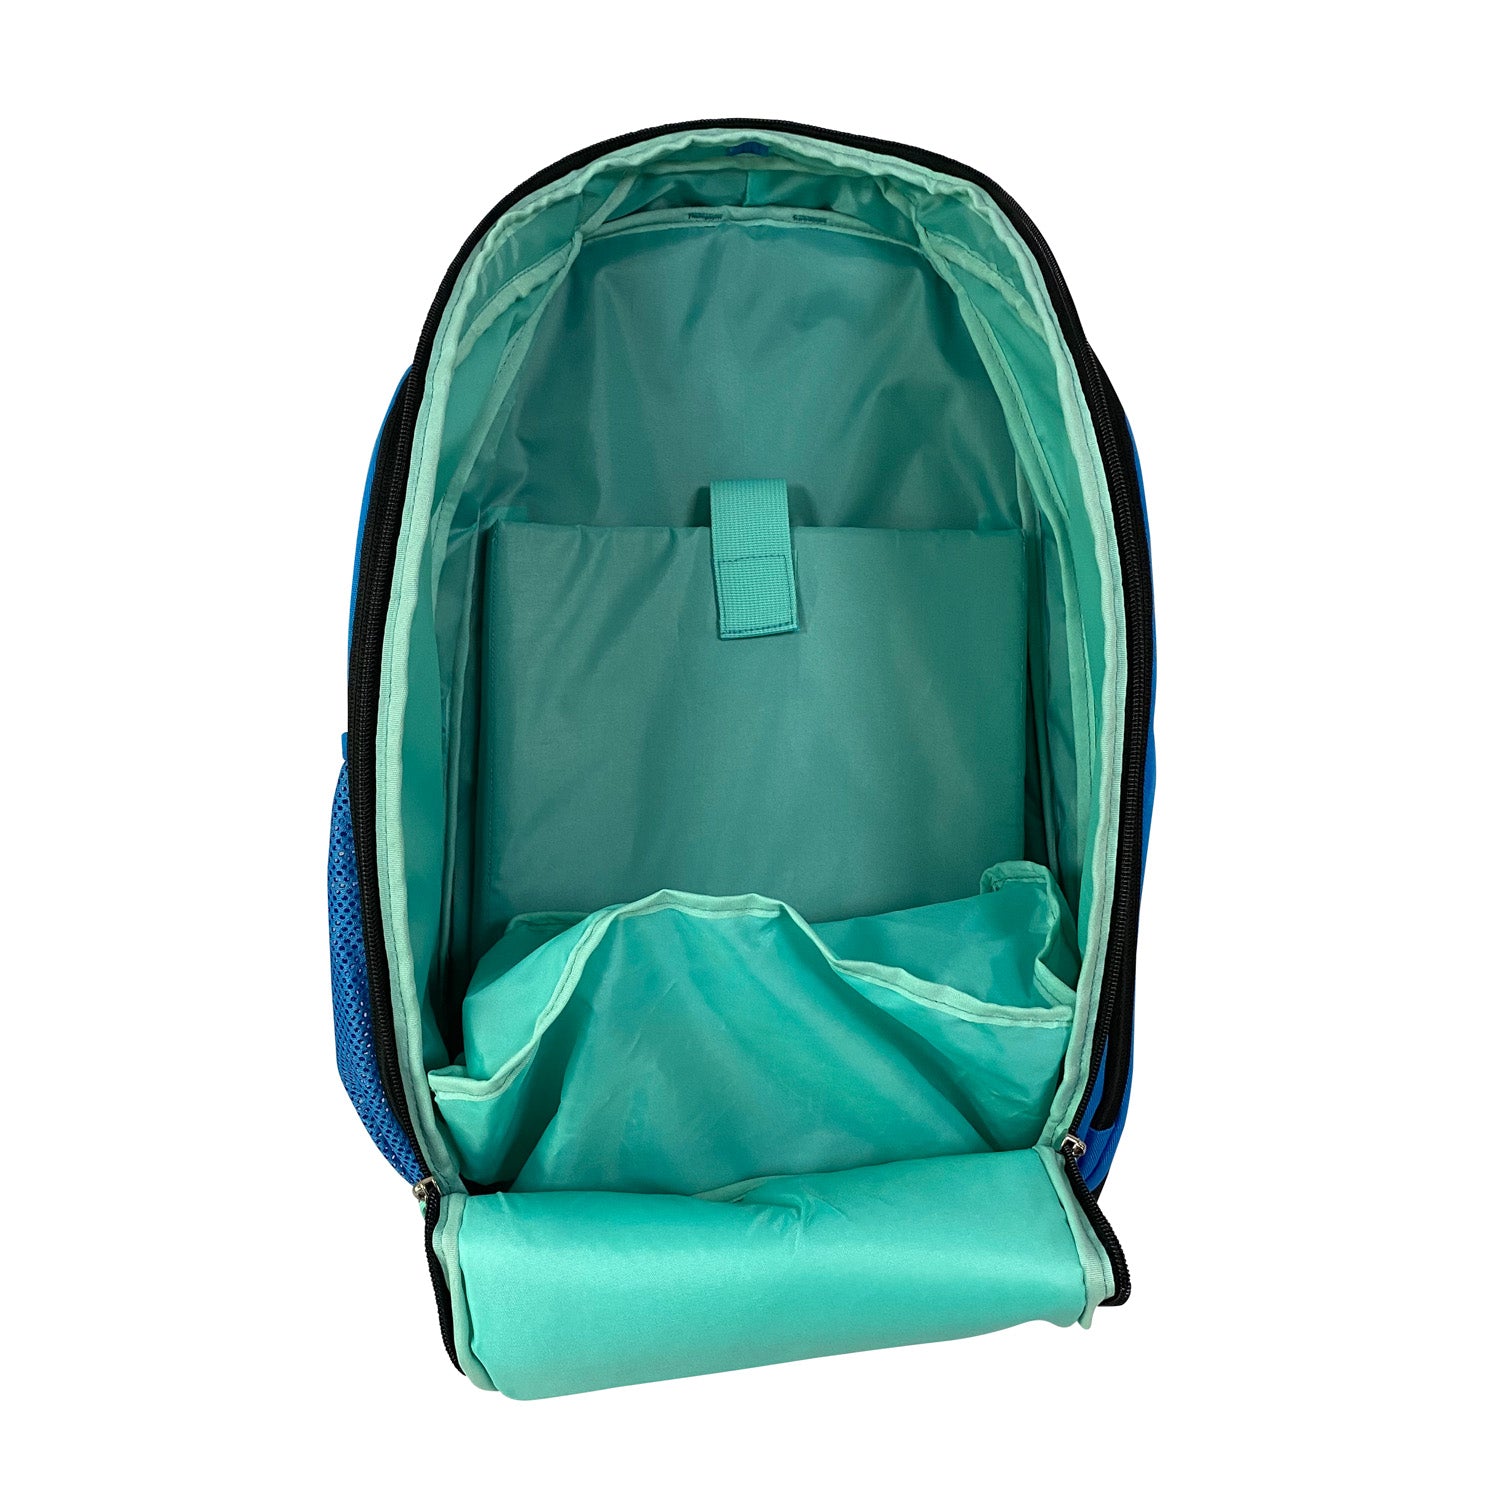 JOOLA Backpack VISION II#Farbe_Leuchtblau